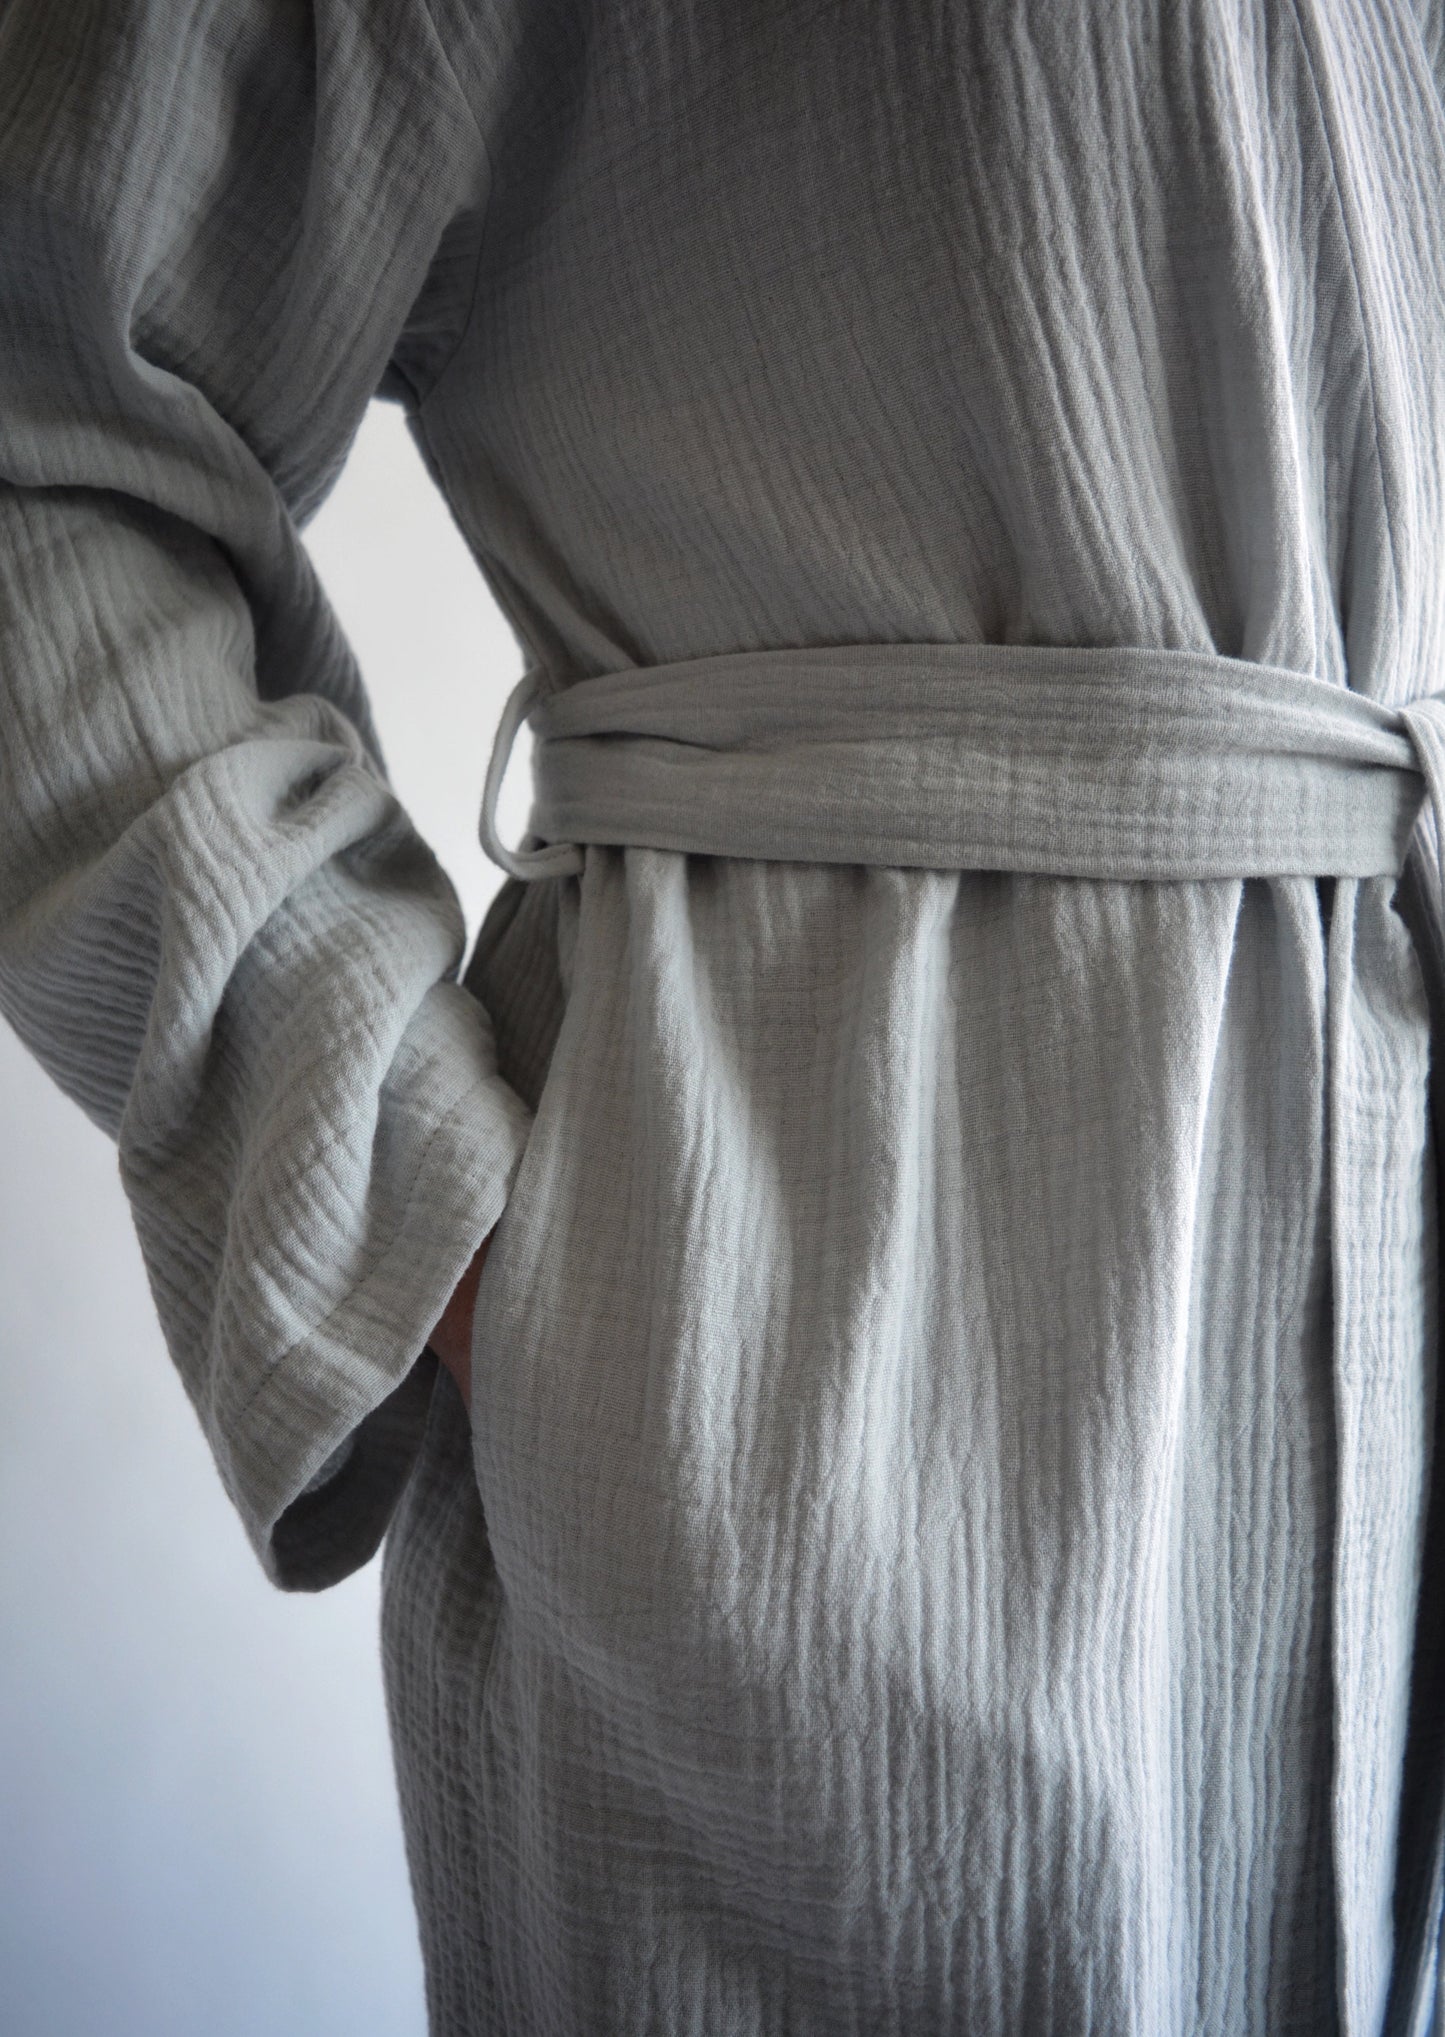 Cotton Muslin Double gauze Robe in Grey color